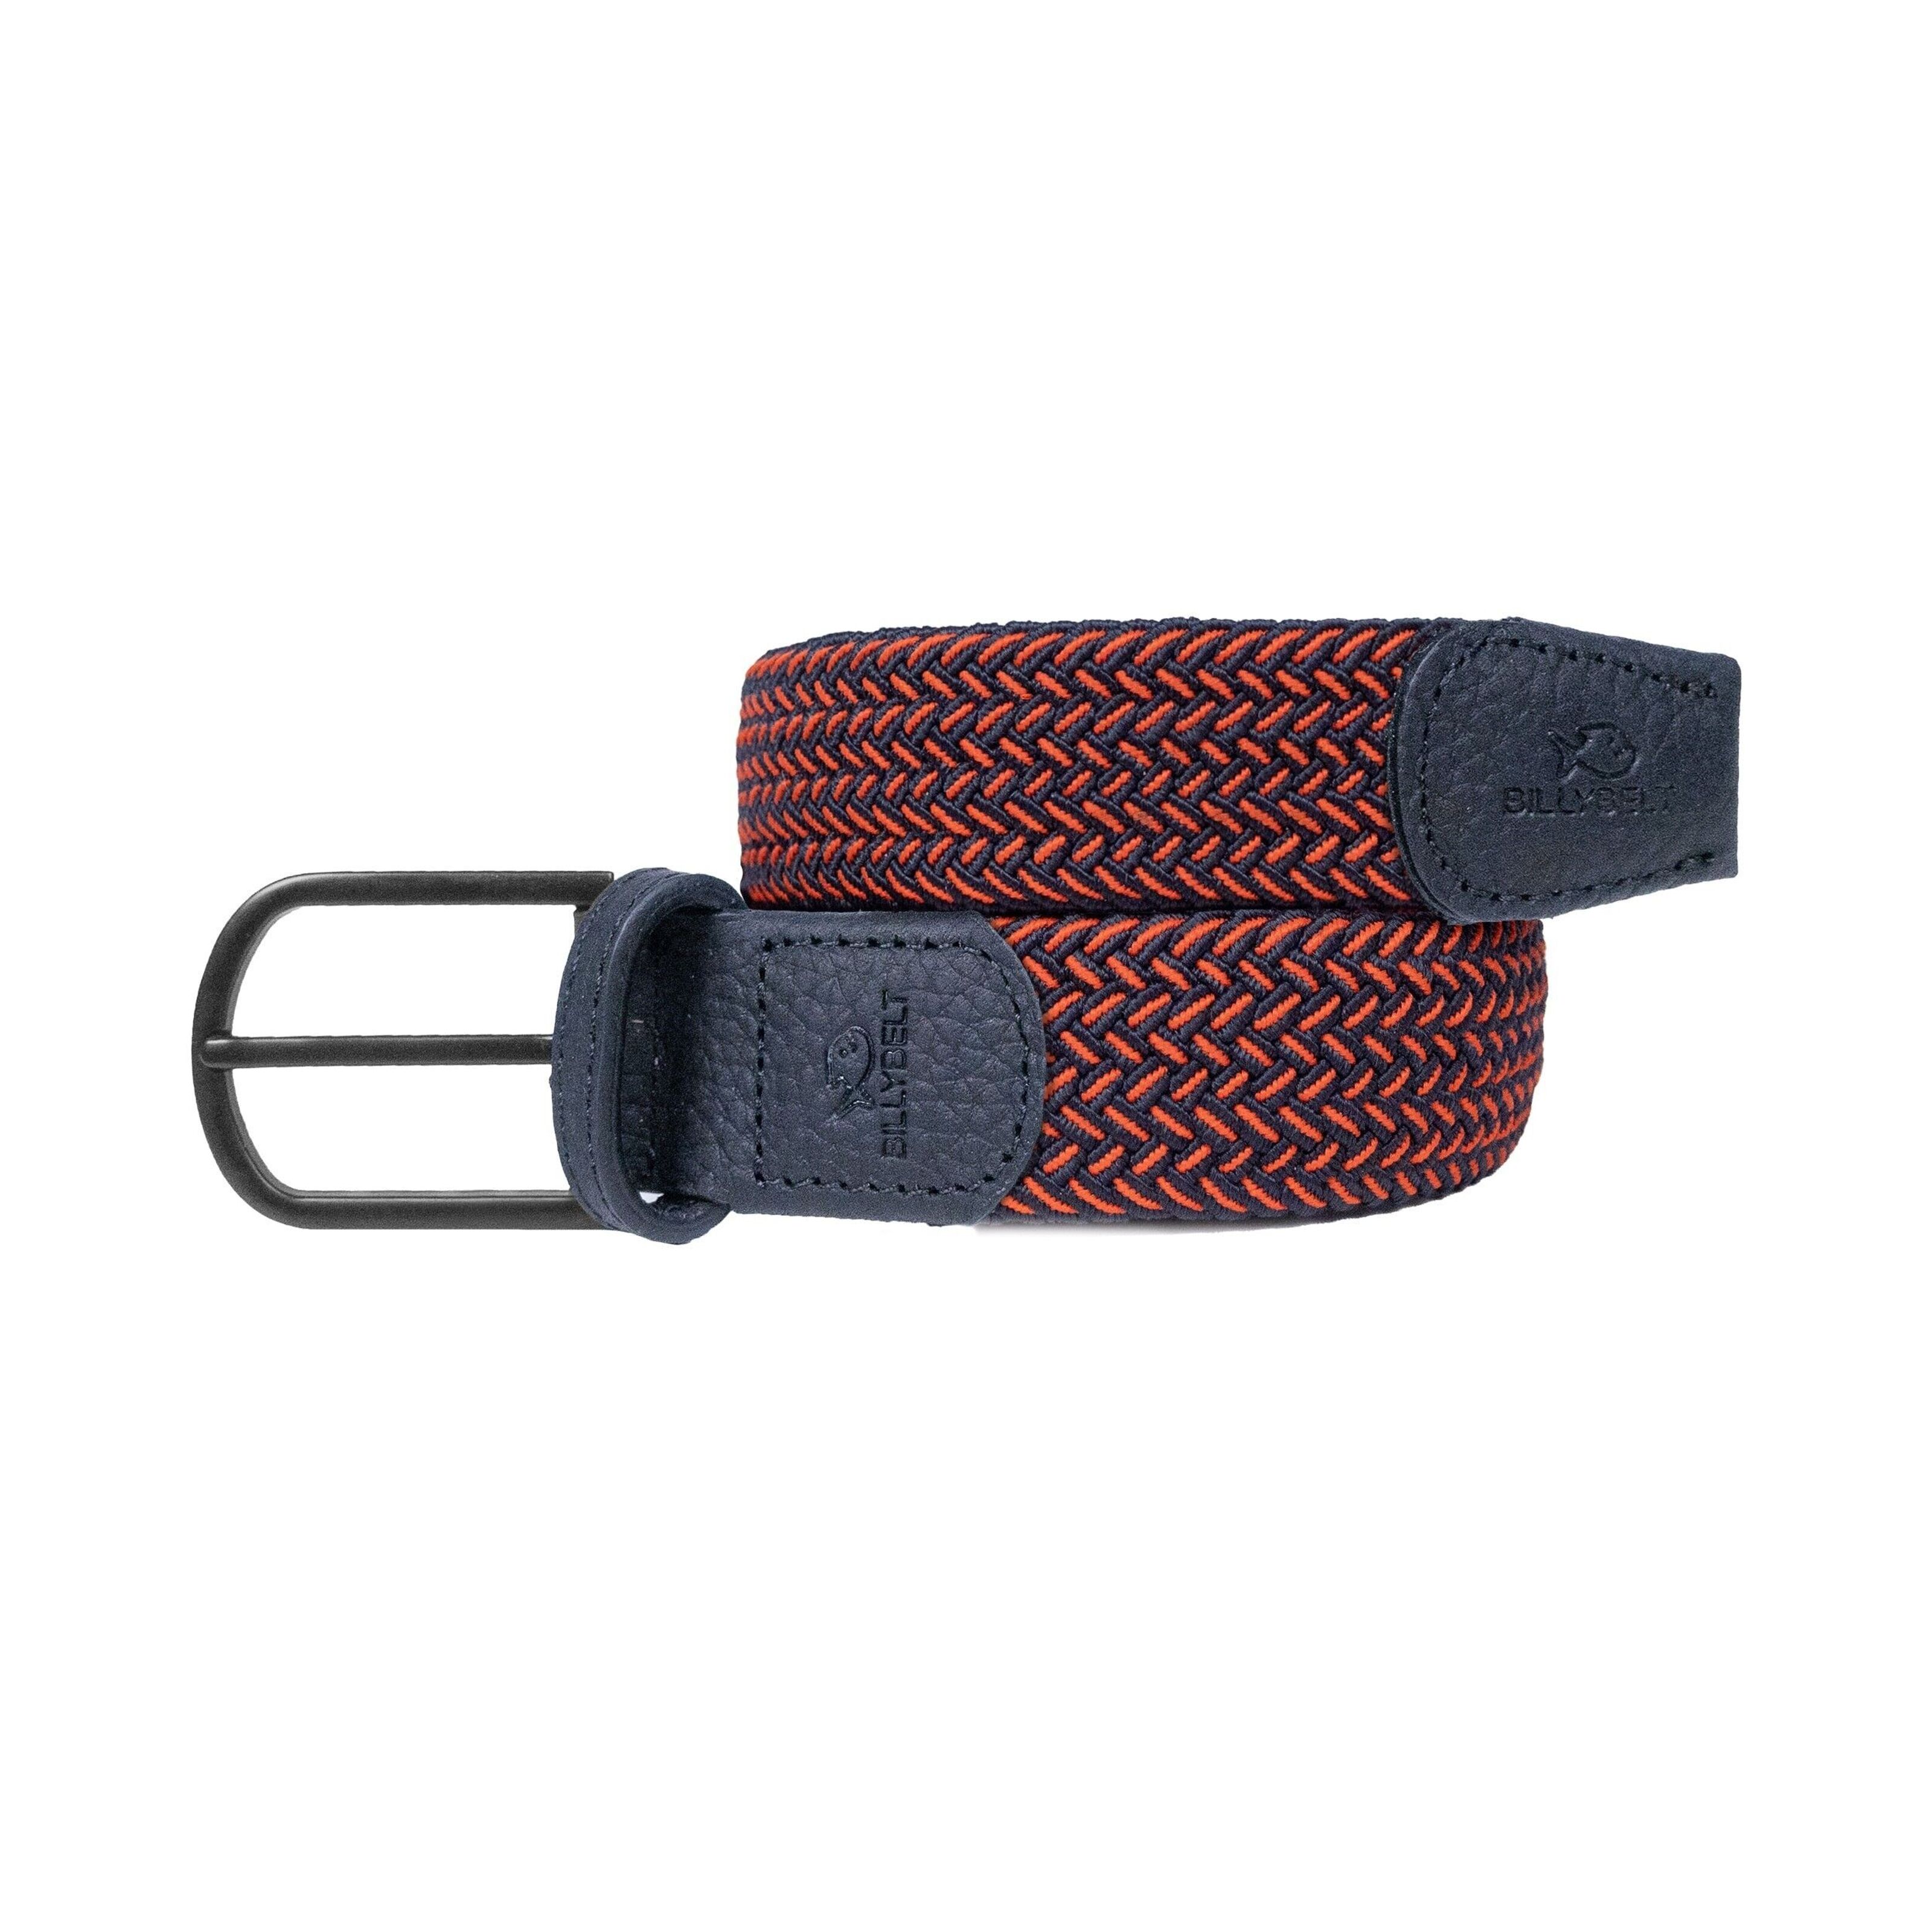 BILLYBELT MEN - elastic belt, braided, leather - Sand Beige